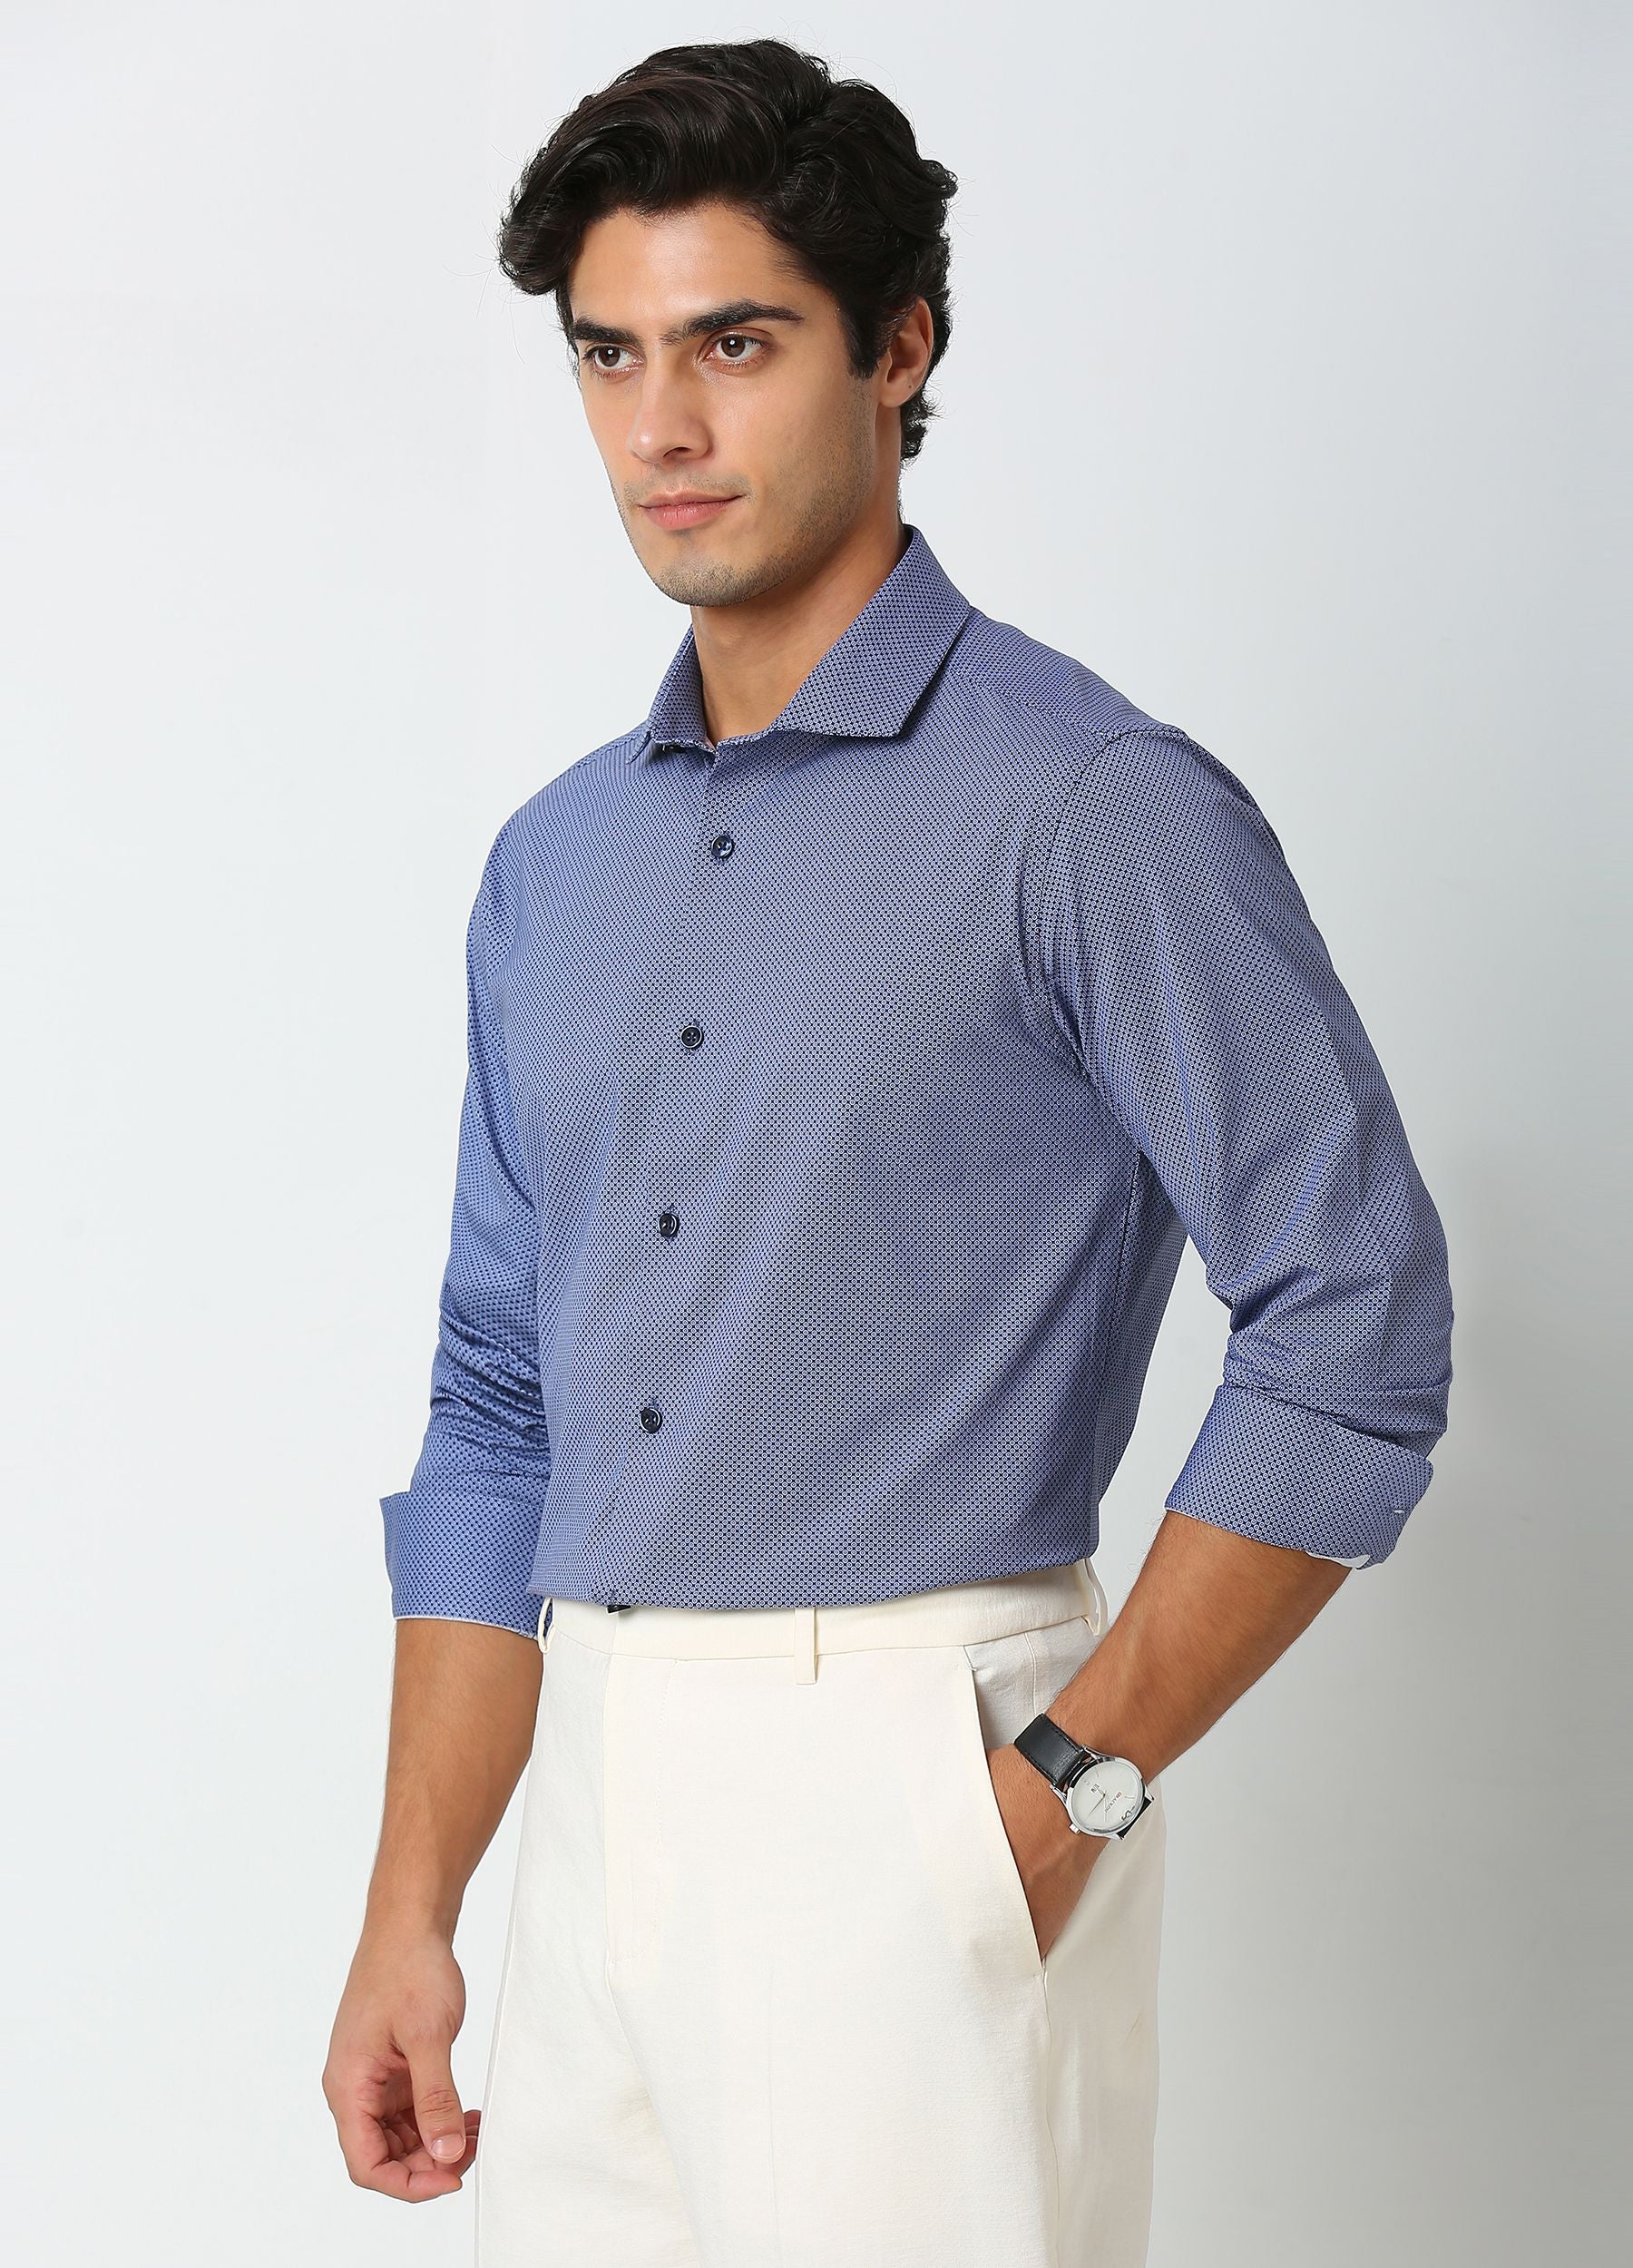 Concentric Blues: Cutaway Collar Print Knit Shirt